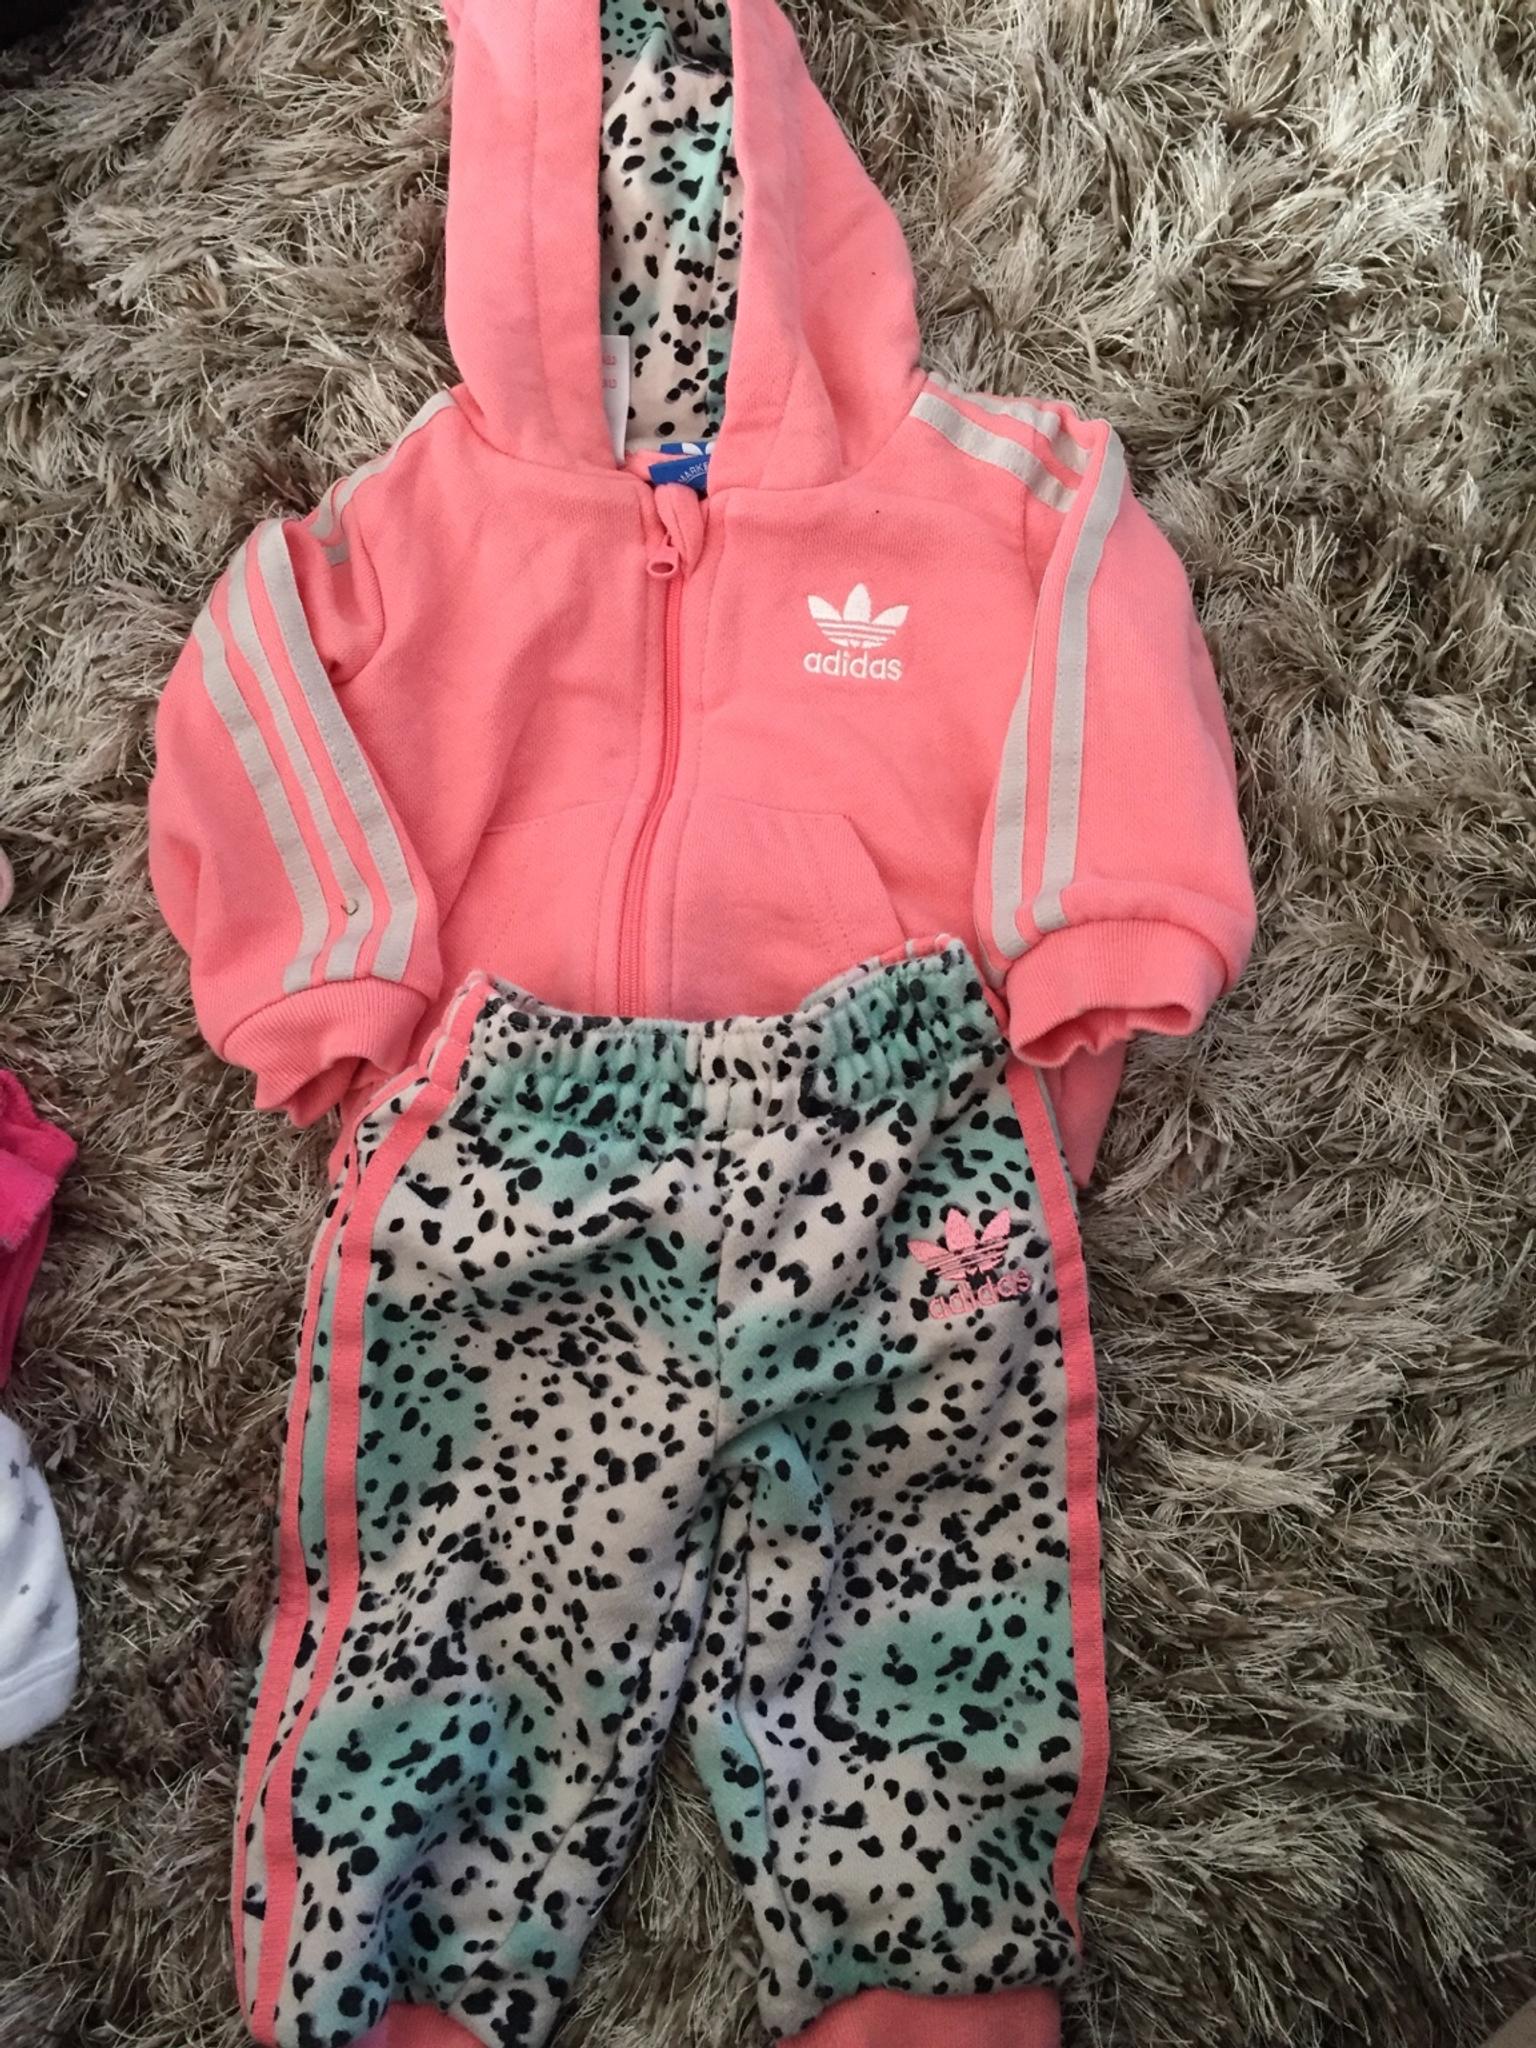 newborn girl adidas outfit